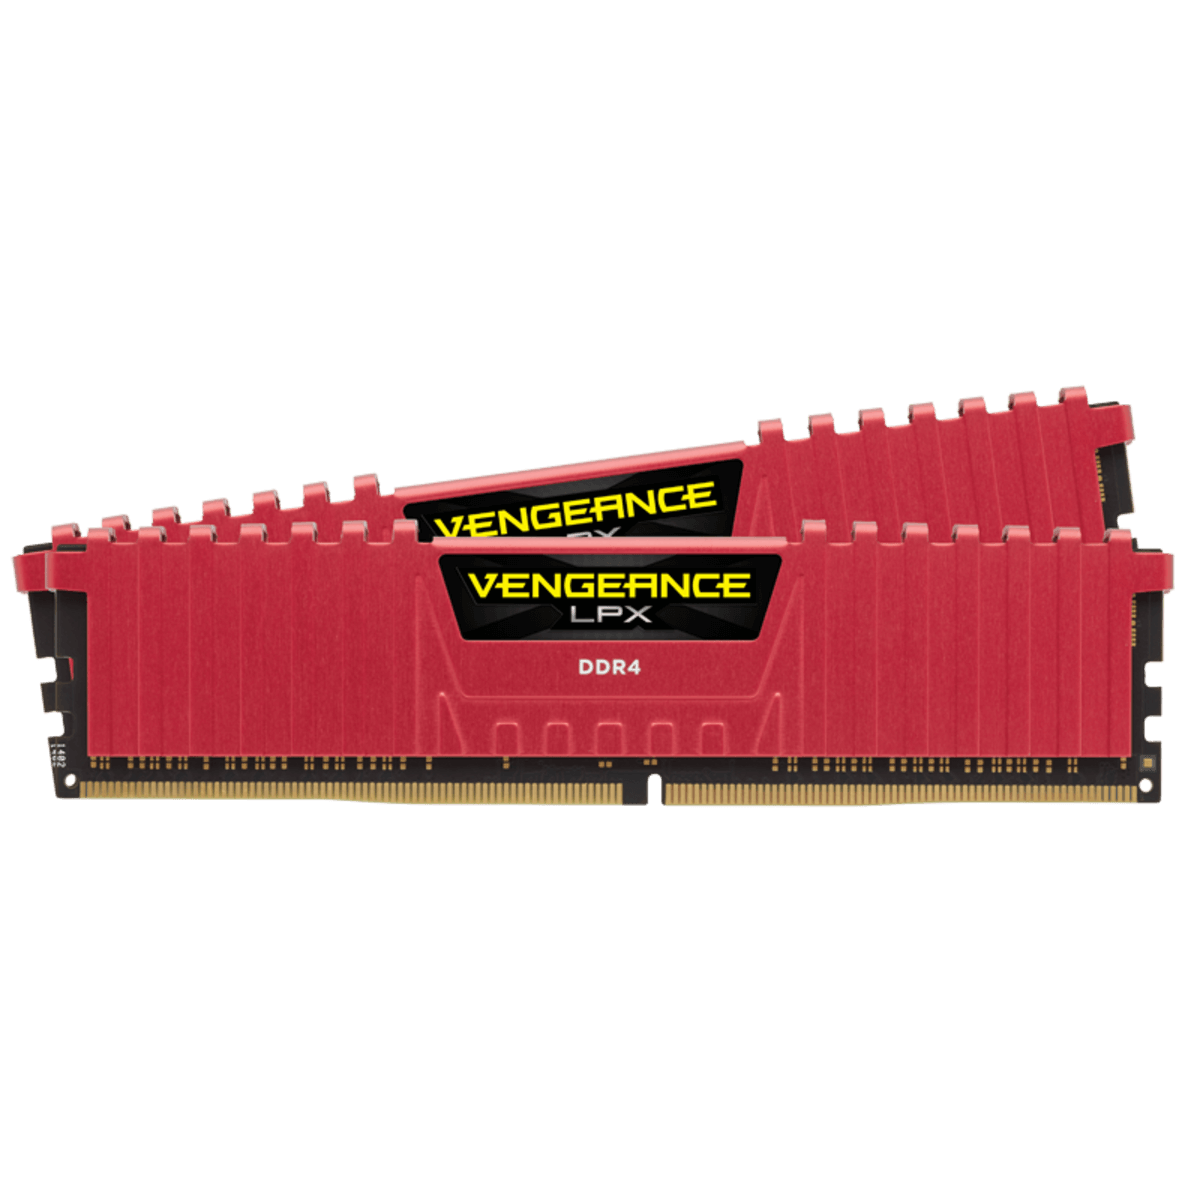 Memória DDR4 Corsair Vengeance LPX, 8GB (2X4GB) 2666MHz, Red, CMK8GX4M2A2666C16R